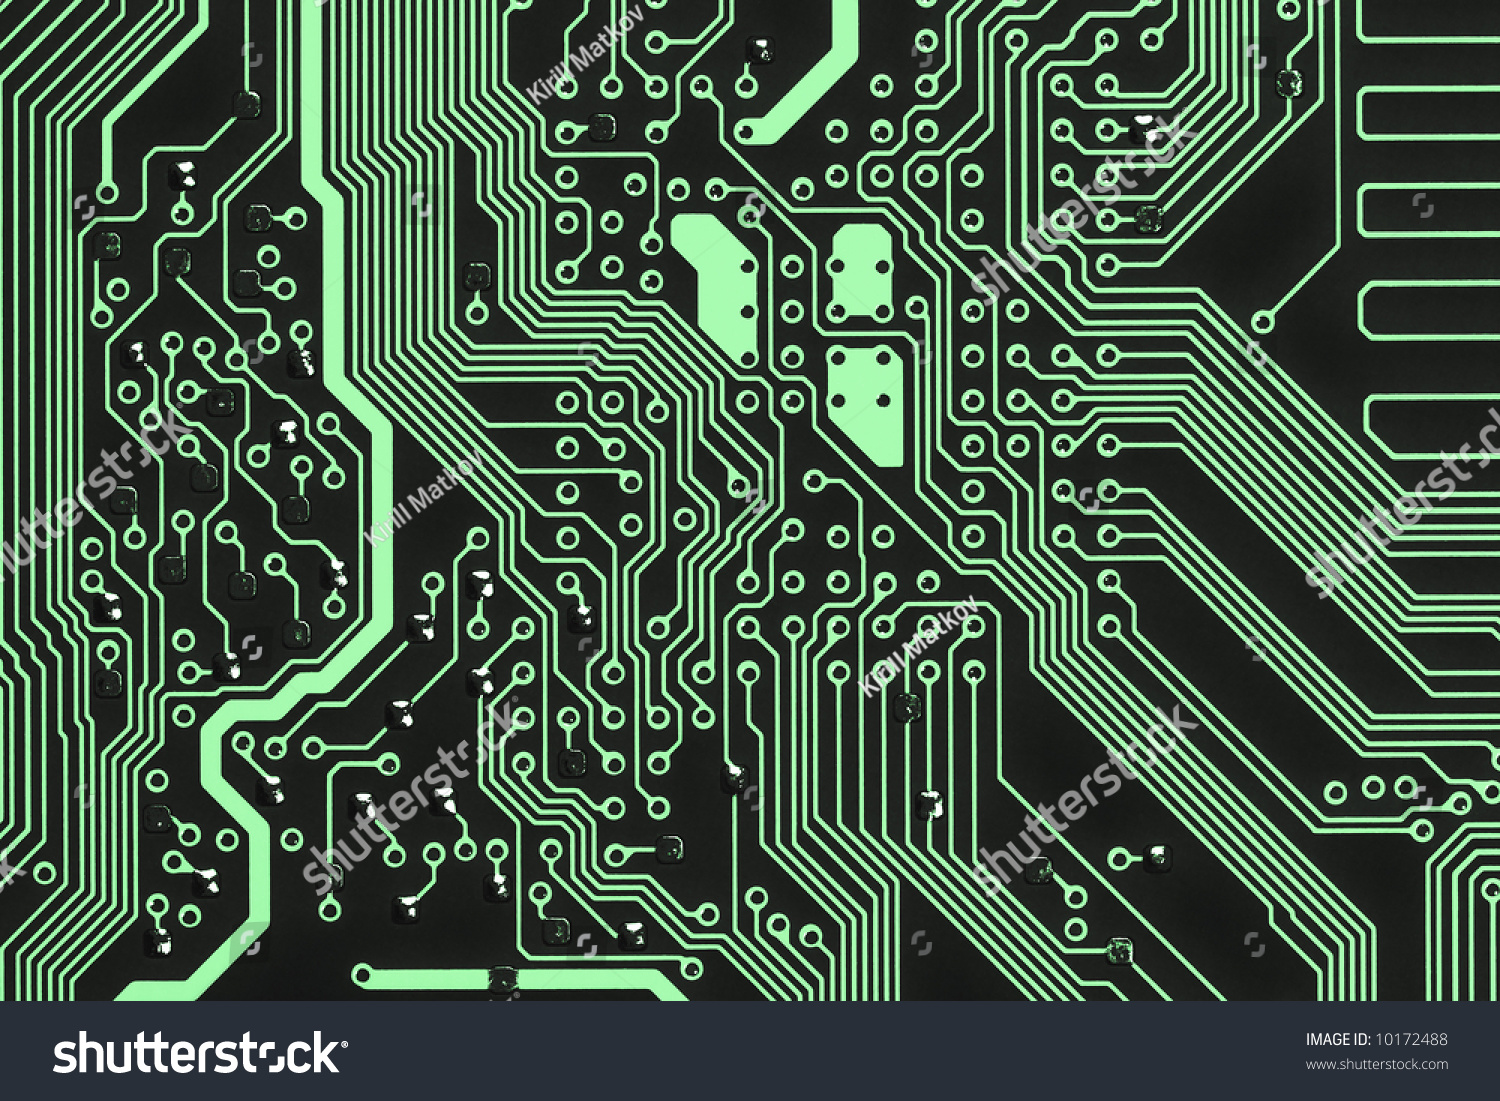 Computer Circuit Board #10172488